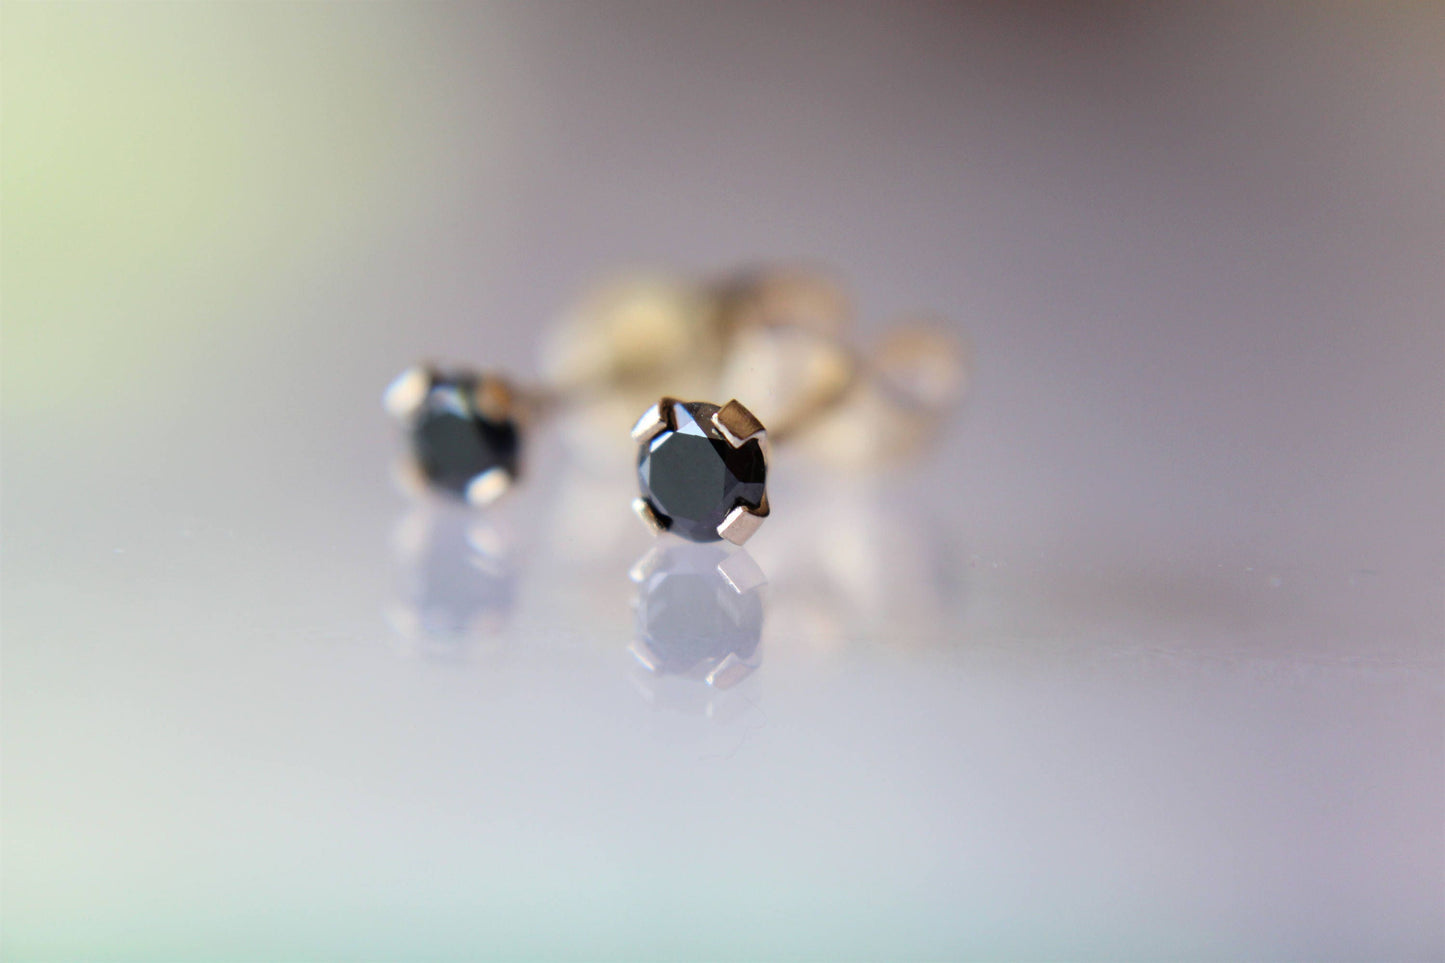 Genuine BLACK DIAMOND Earring Studs, Post 14k Solid Gold, Lobe Cartilage Helix Tragus, Tiny Black Diamond Earrings, Gift, Black Gemstone